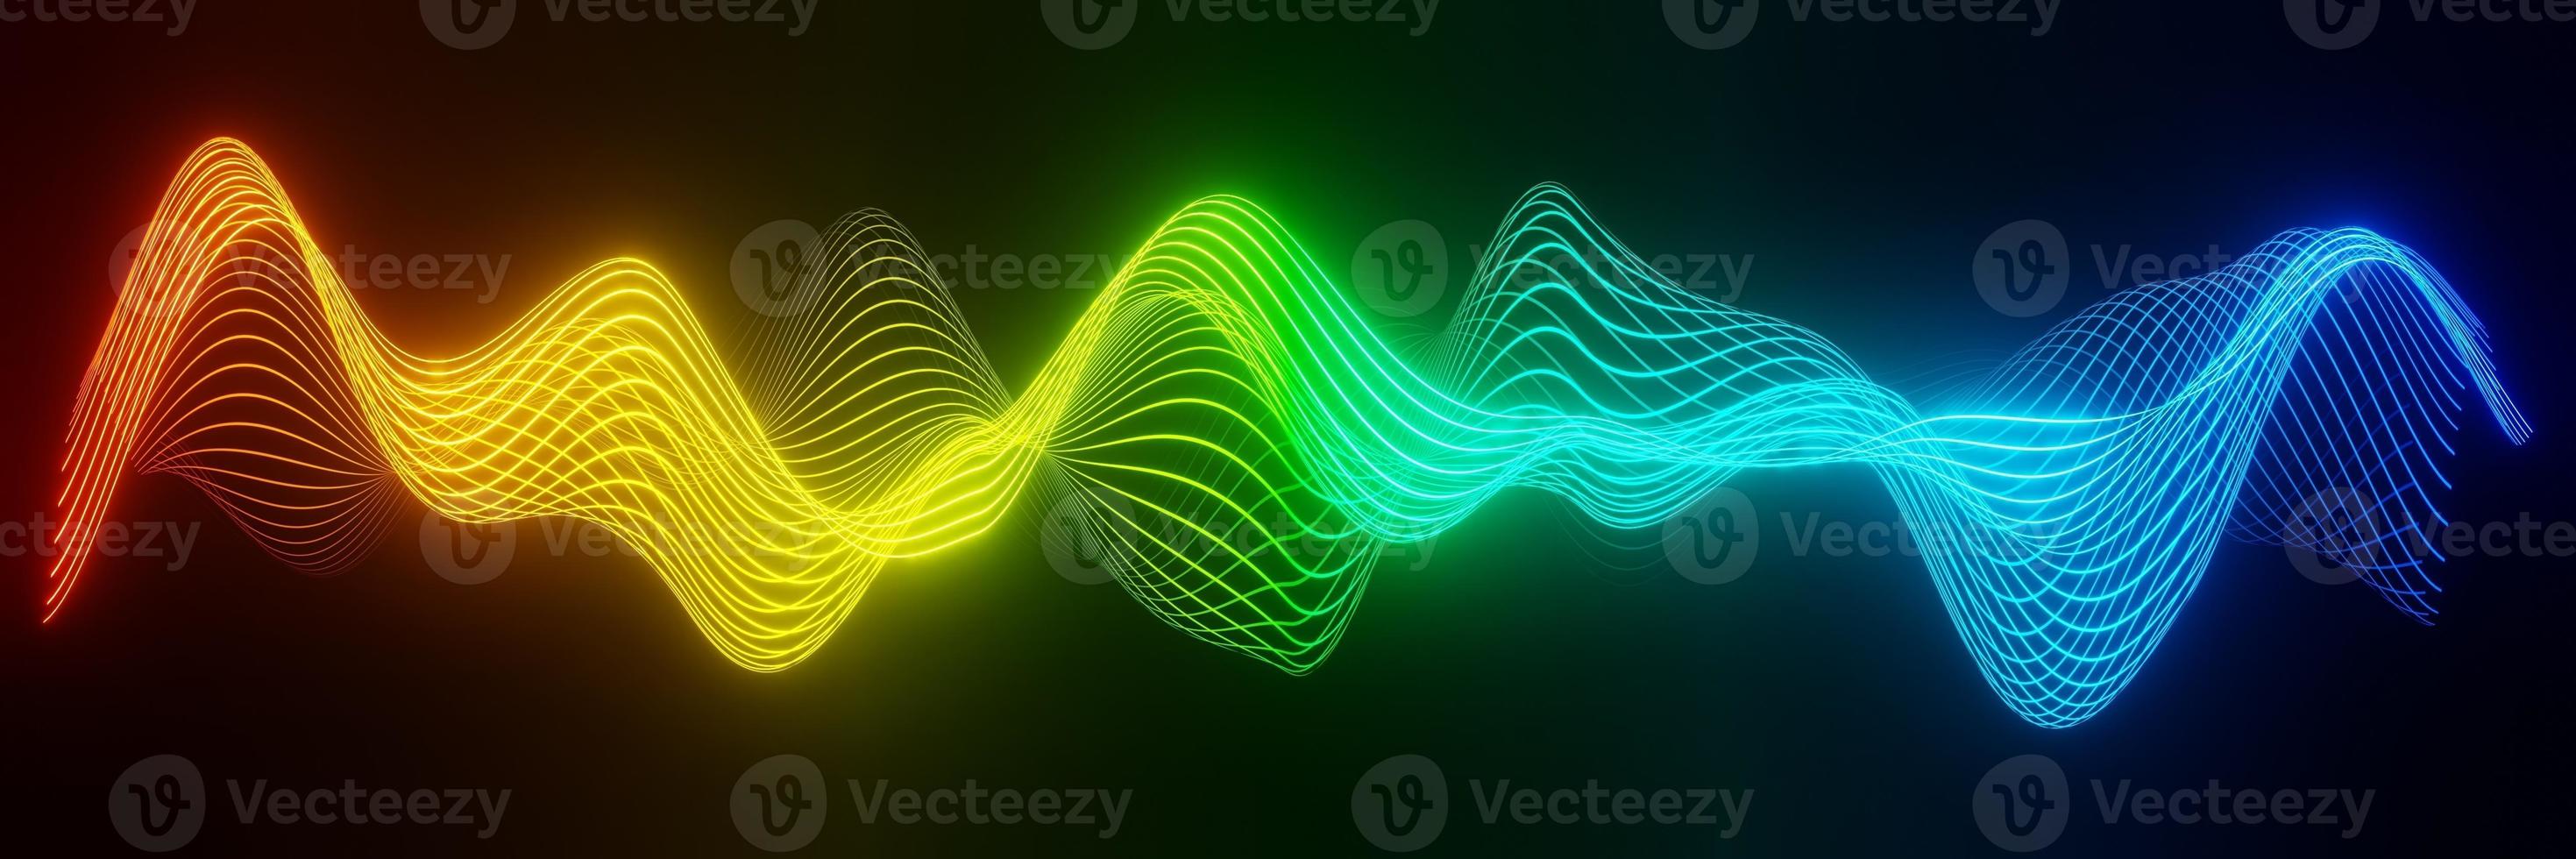 abstract technologie kleurrijk helder neon gloeiend golf audio visualizer achtergrond panorama 3D-rendering foto